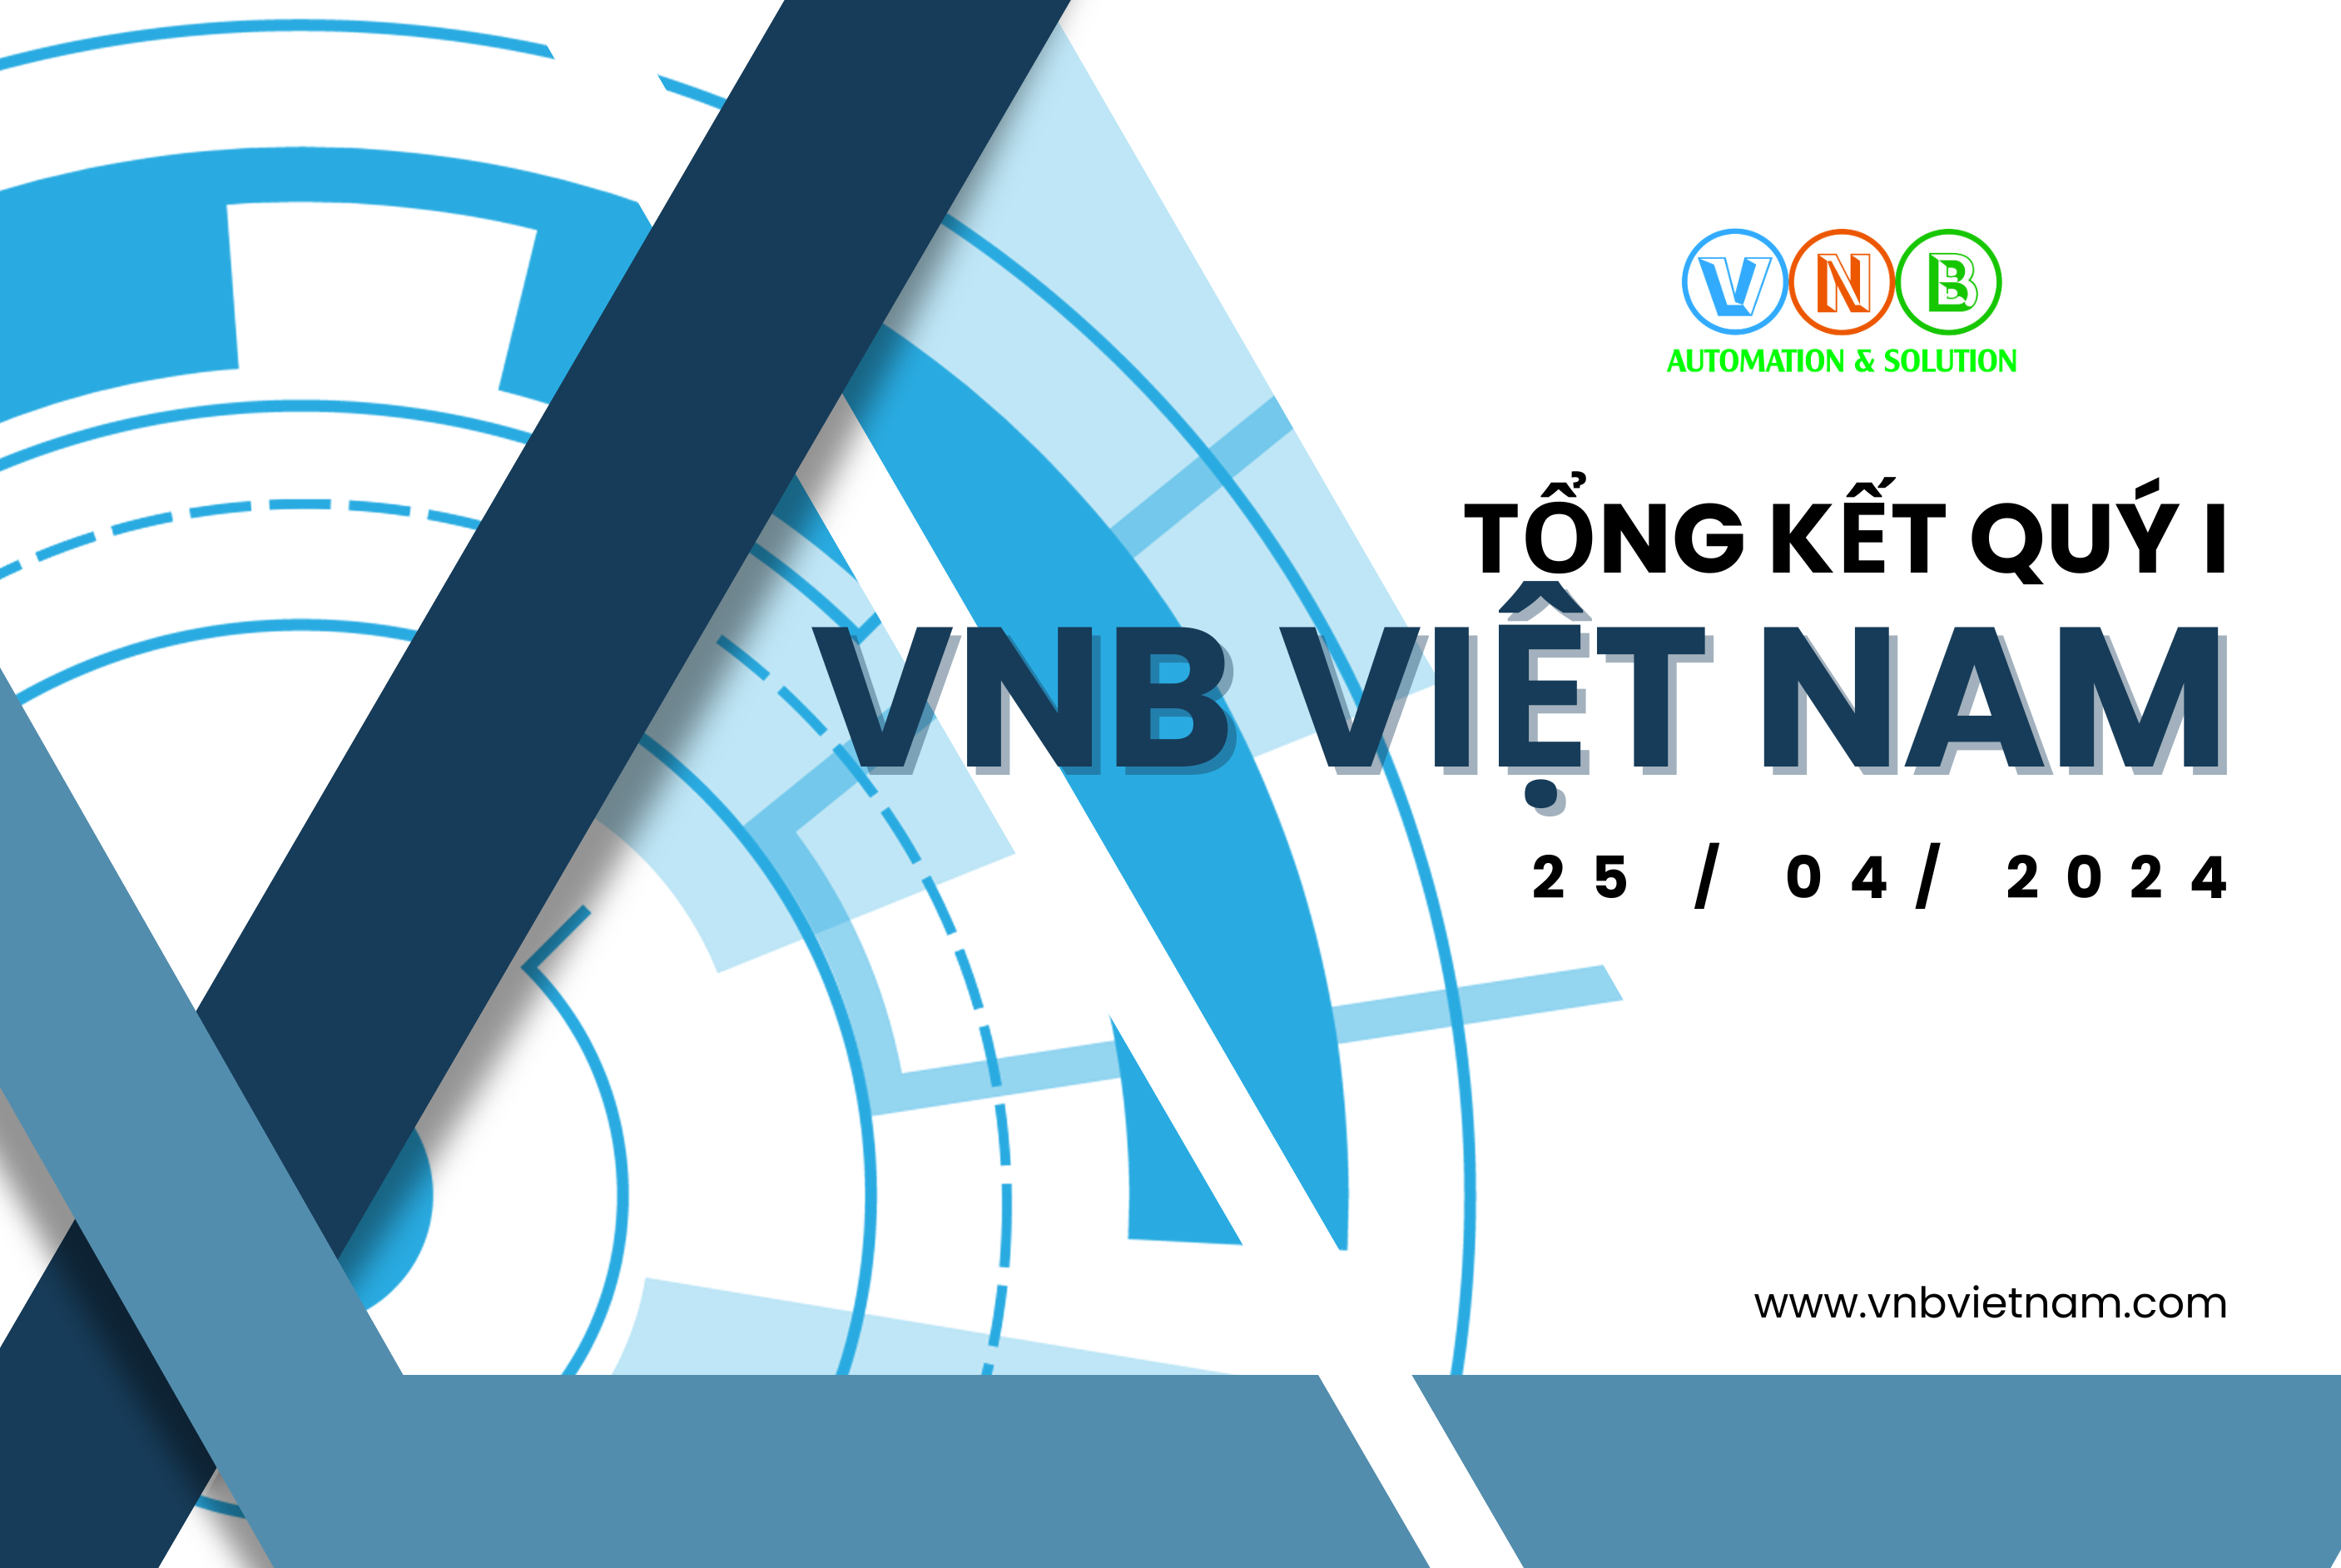 Tong Ket Quy 1 Vnbvietnam 1